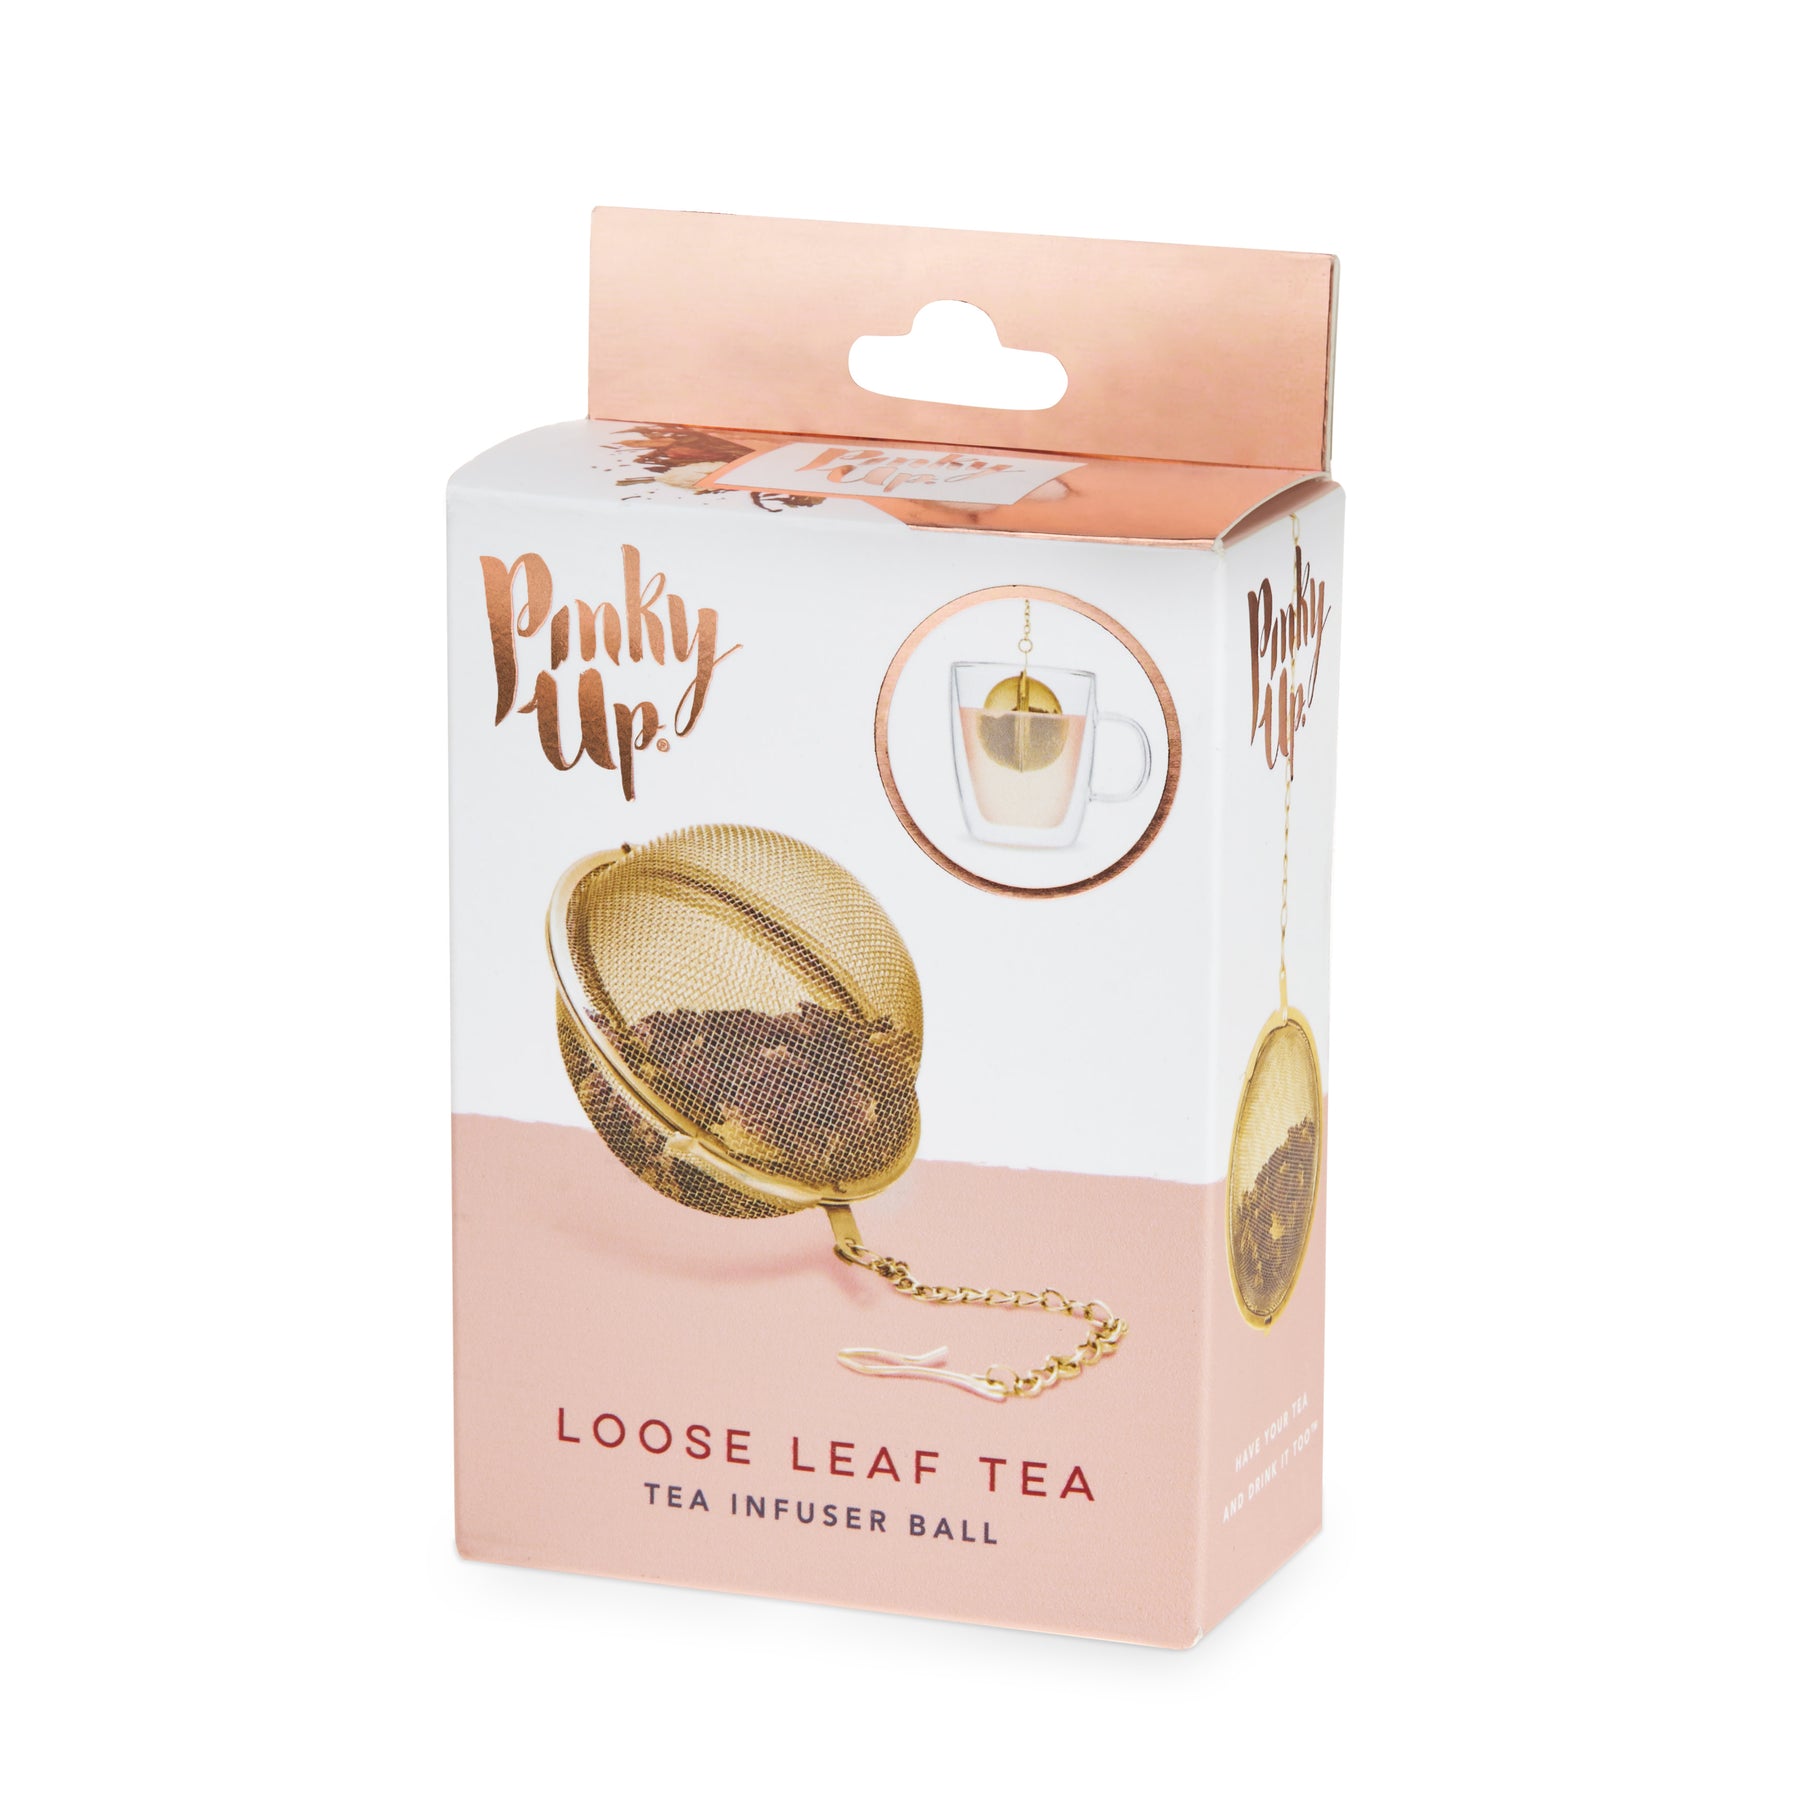  Pinky Up Star Shaped Tea Ball, Reusable Loose Leaf Tea